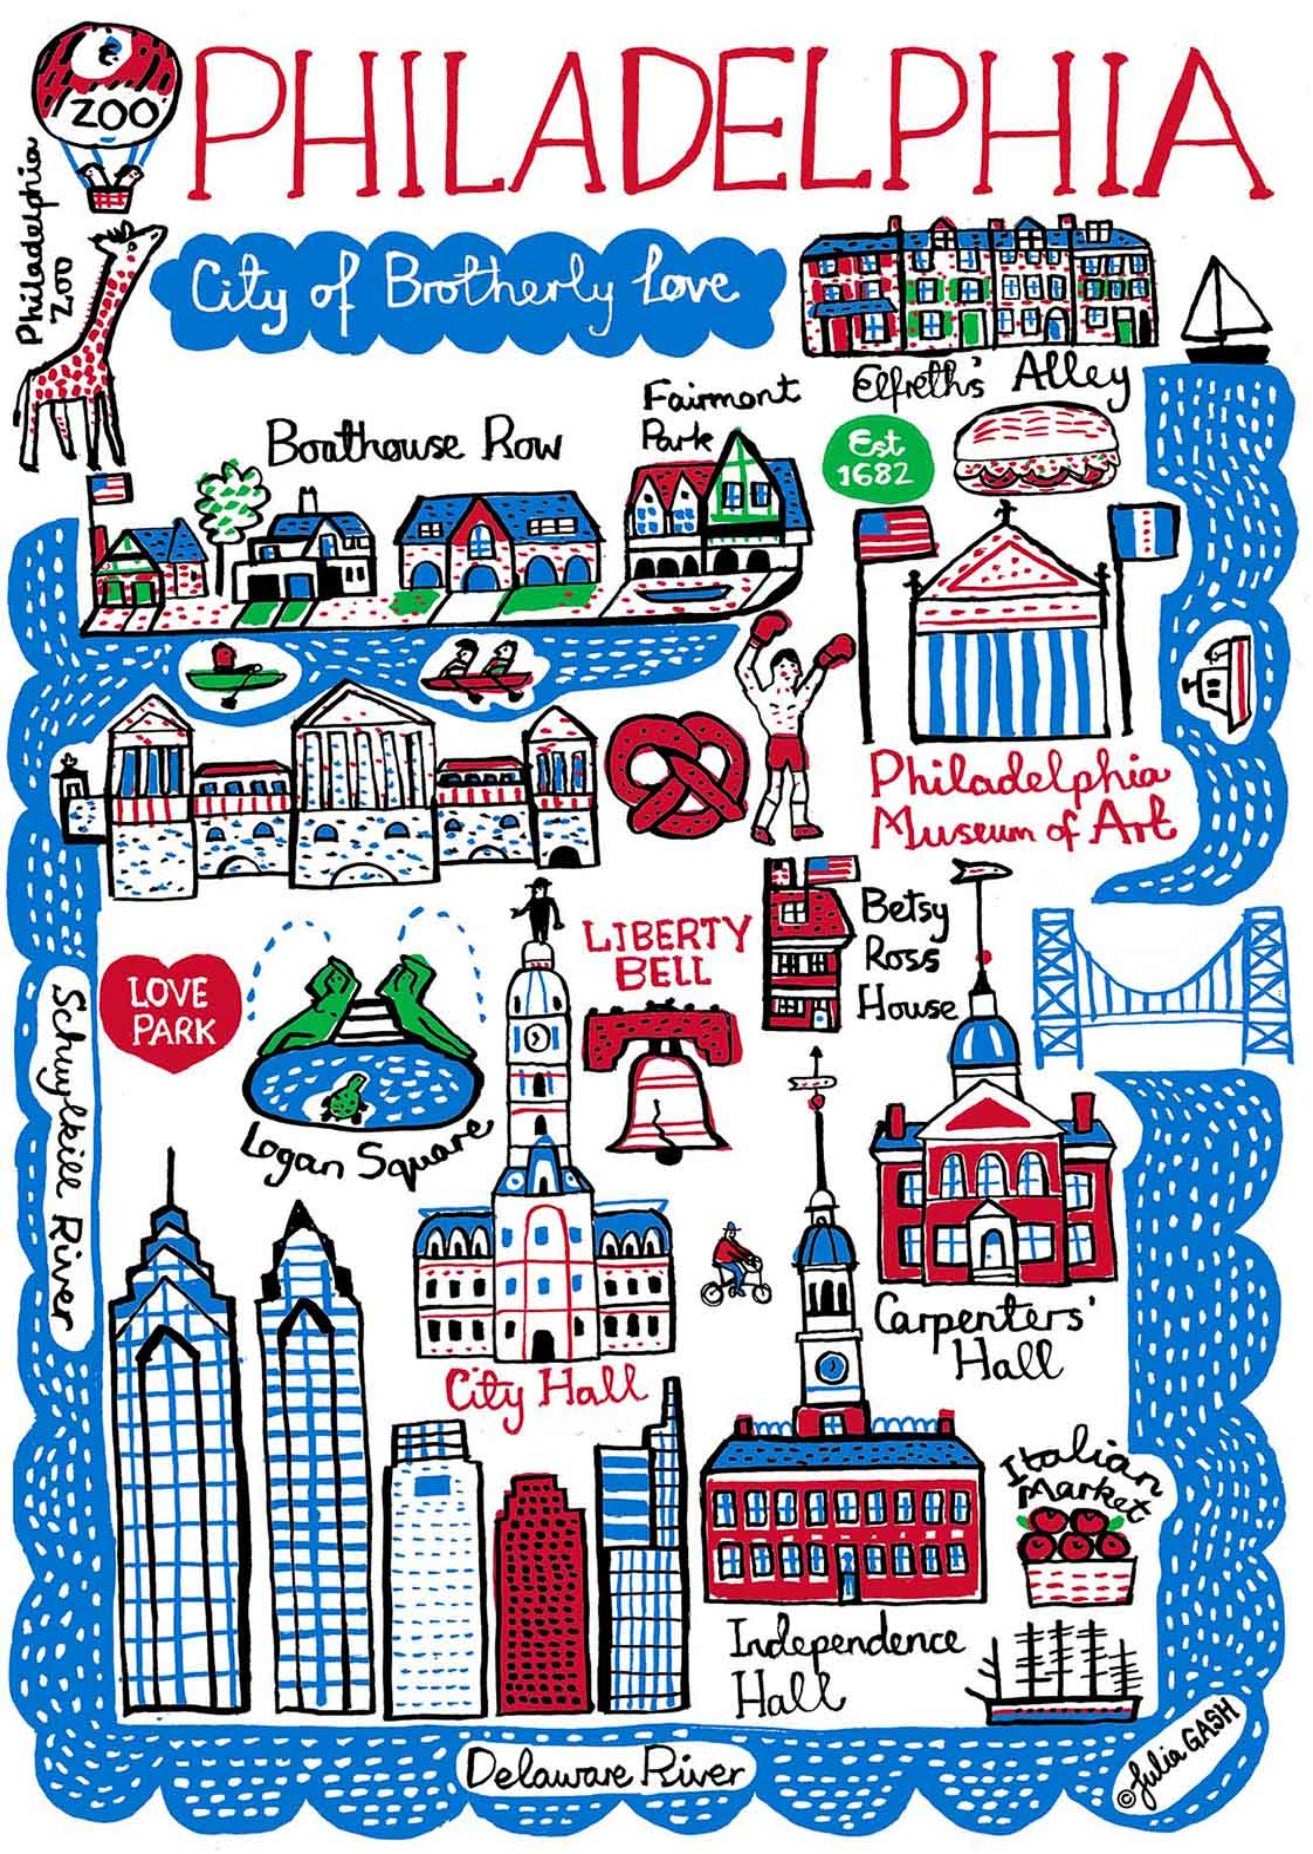 Modern Philadelphia Pennsylvania USA Travel Map Illustration by British travel artist Julia Gash